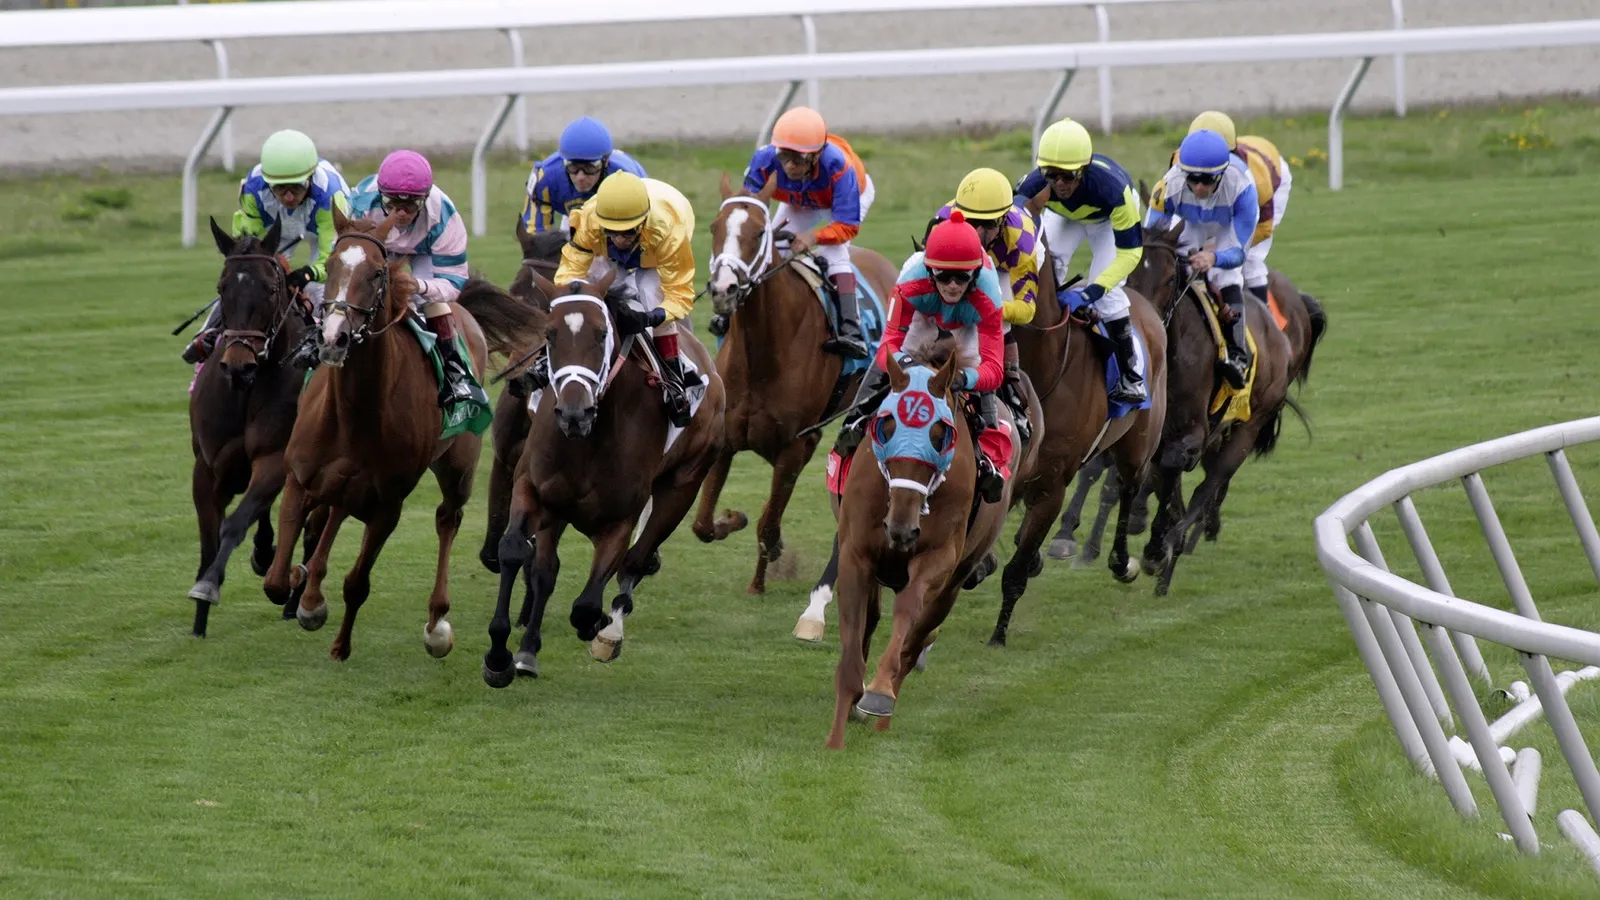 a group of jockeys racing horses